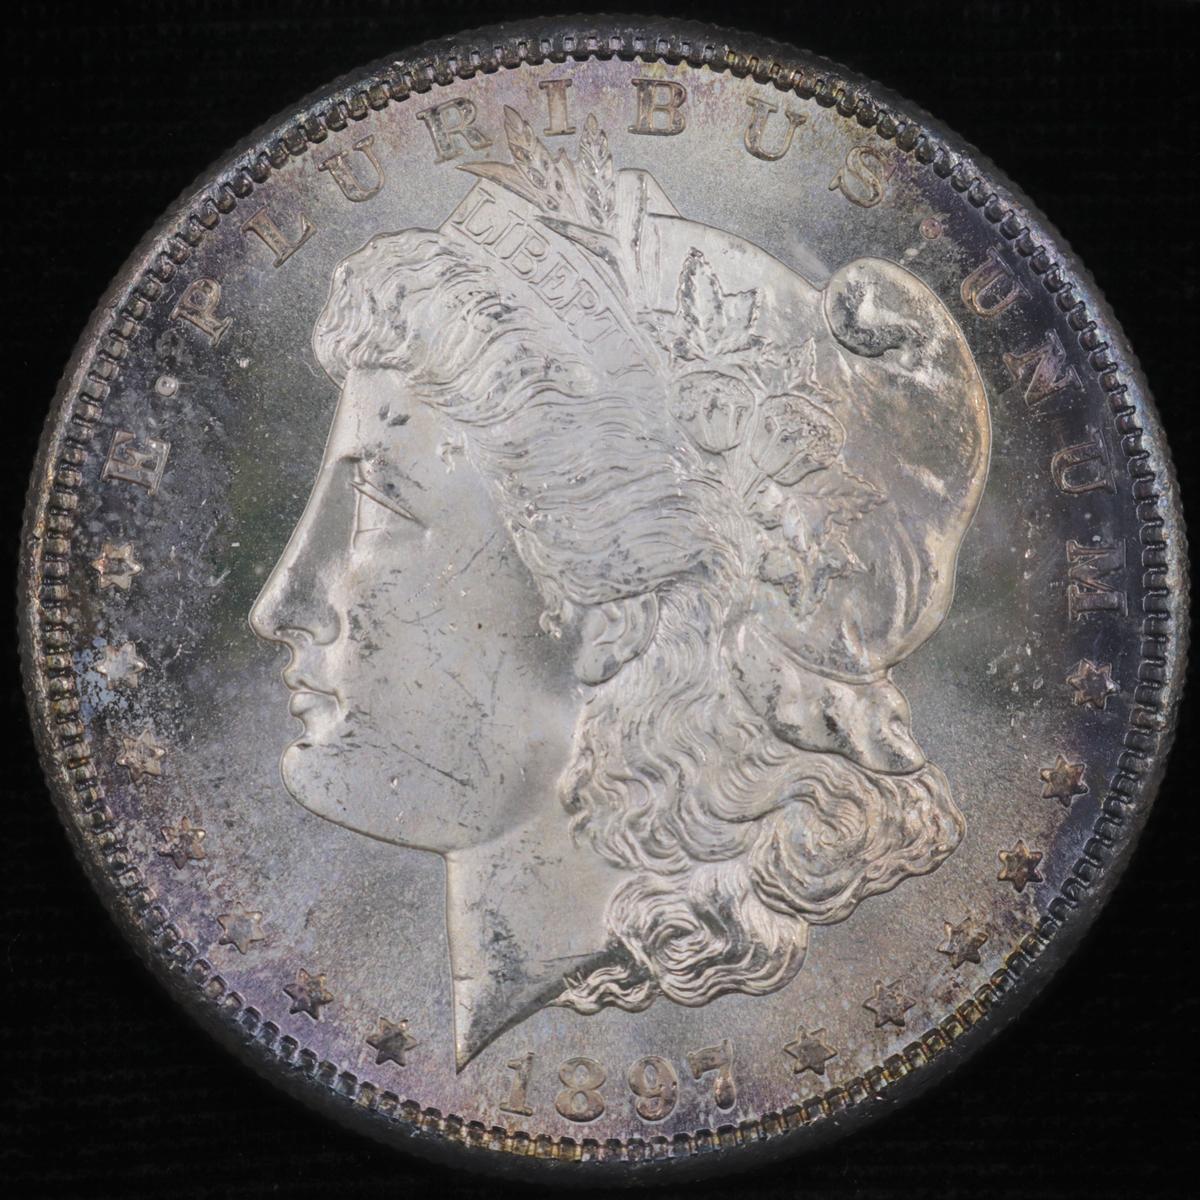 1897-S U.S. Morgan silver dollar